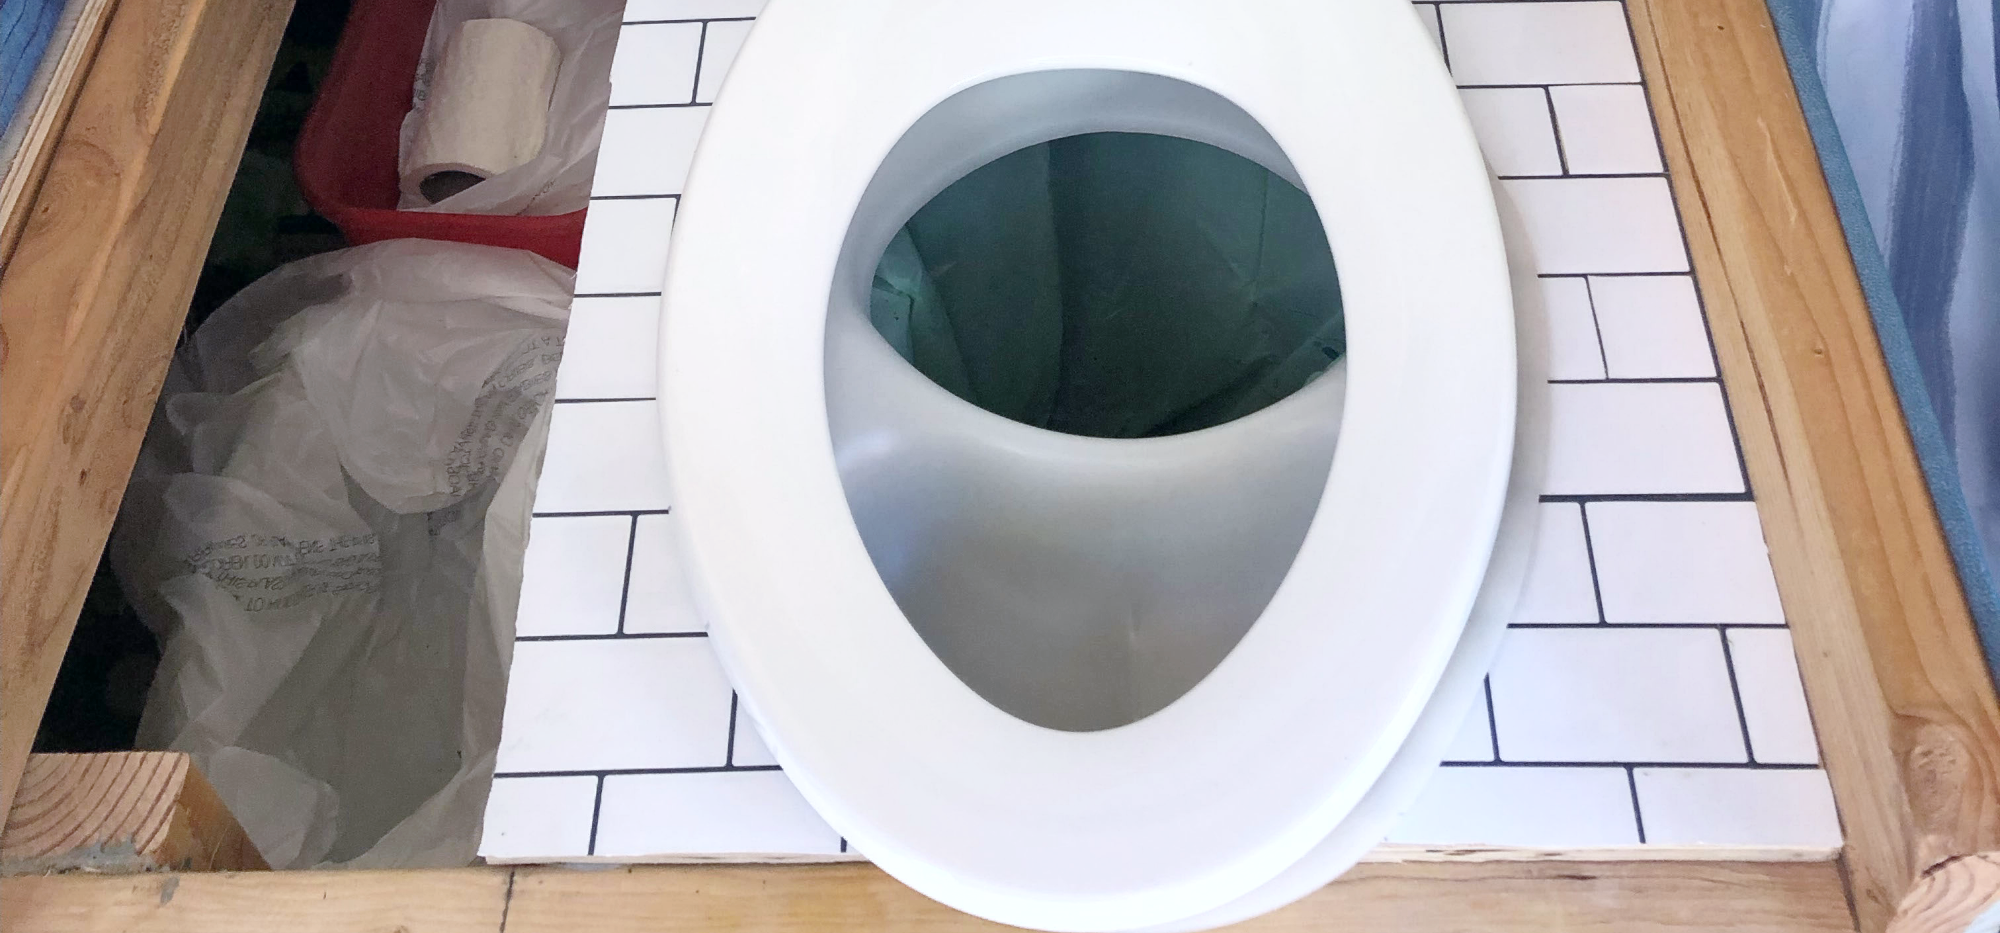 Hidden DIY composting toilet in a camper van – Barbaras custom DIY Throne Toilet